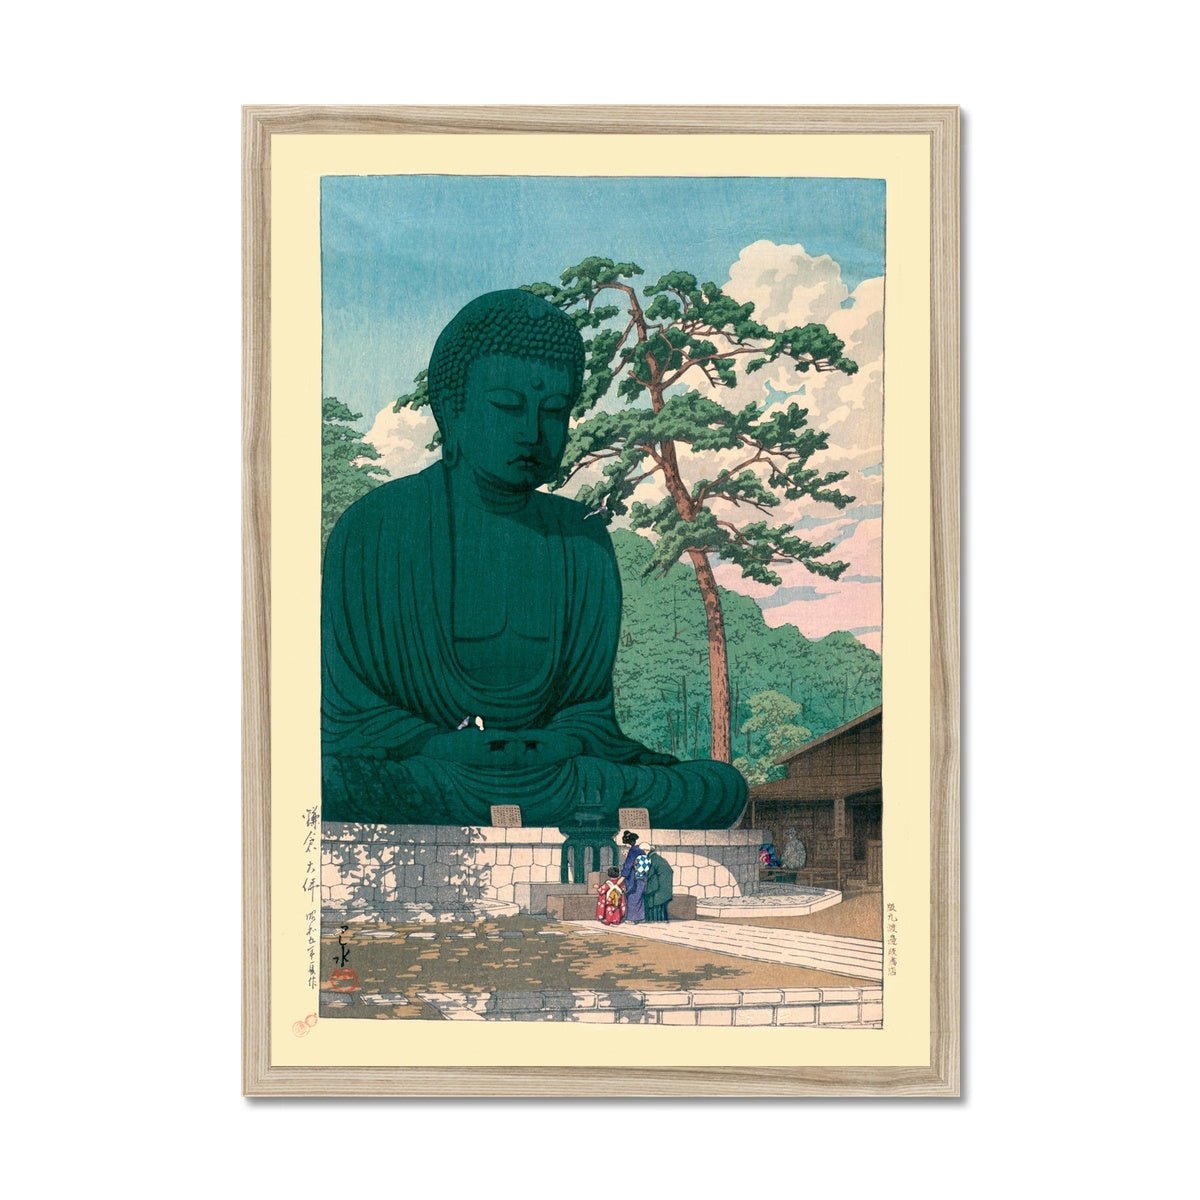 Framed Print 8"x12" / Natural Frame The Great Buddha of Kamakura (Kawase Hasui) Japanese Edo Woodblock Ukiyo-E Framed Art Print